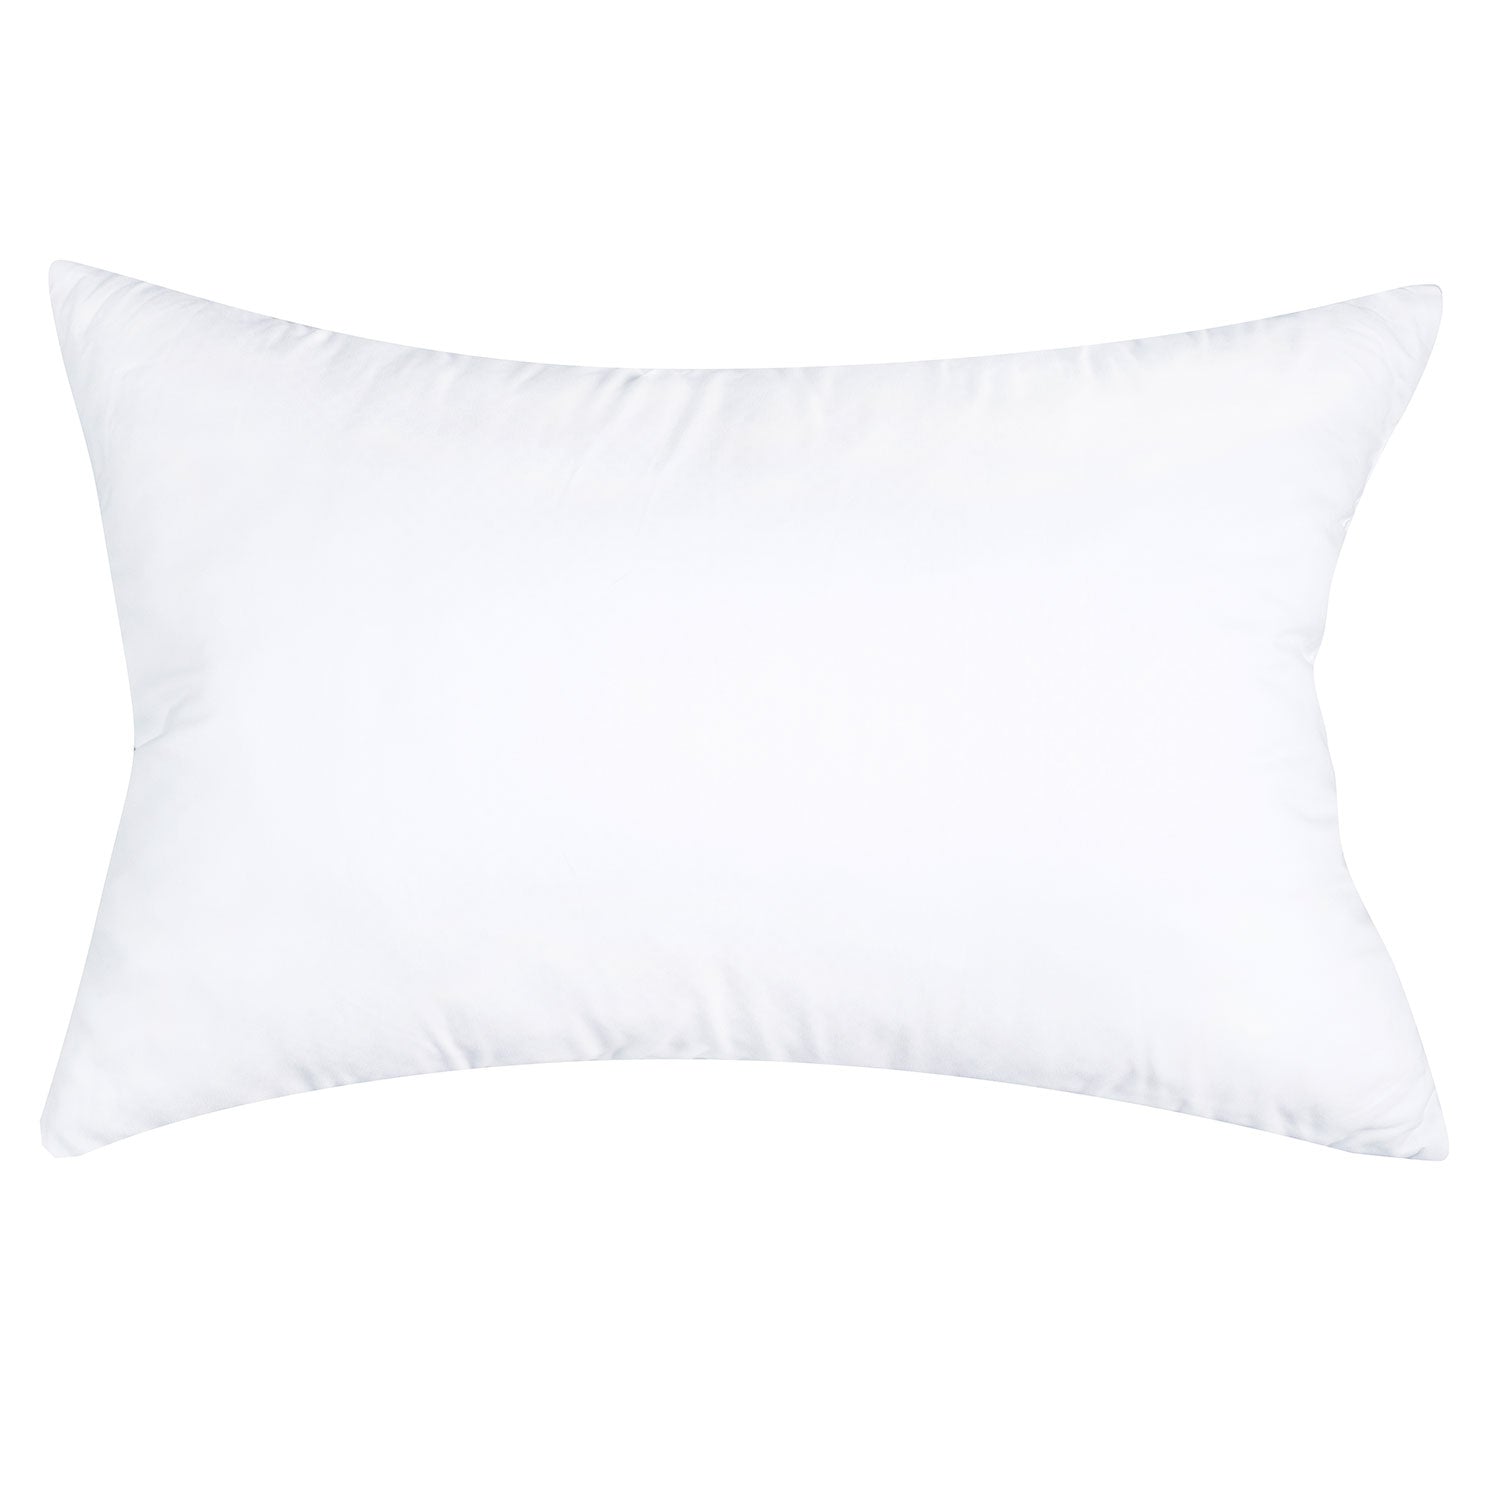 The Bliss Plush Memory Foam Pillow - BlissfulNights.com